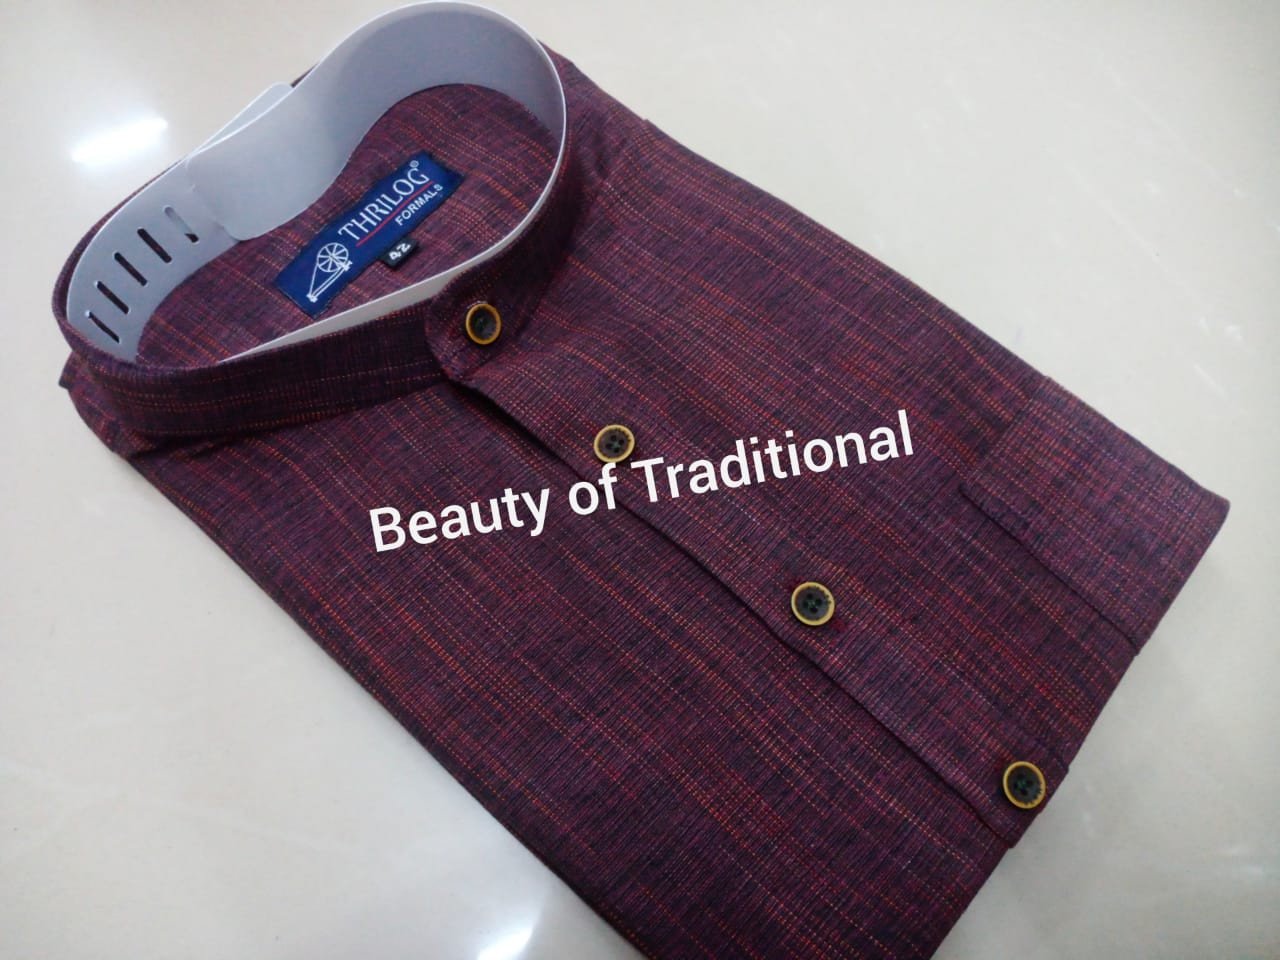 Men's Kerala traditional shirts and mundu